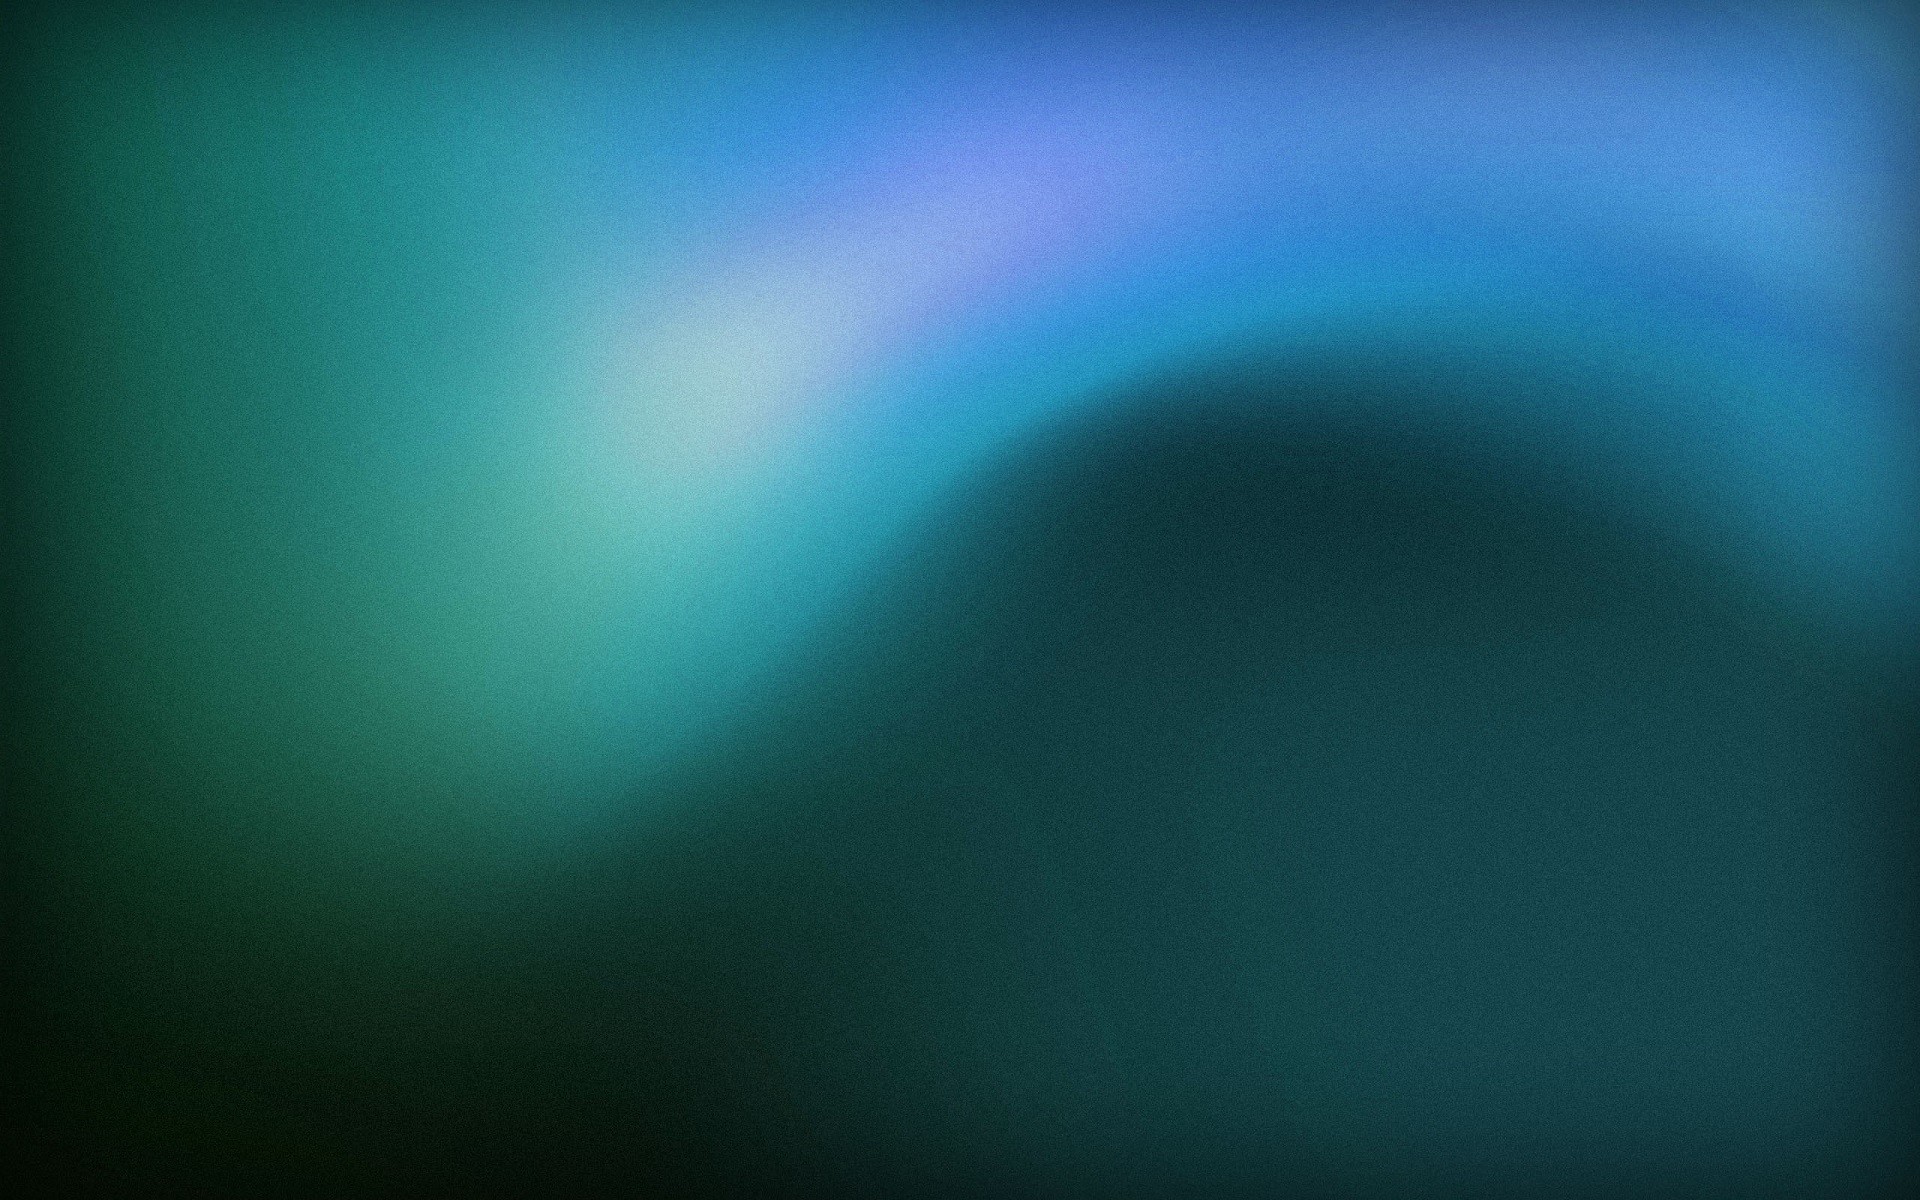 ubuntu gnome wallpaper,blau,grün,türkis,himmel,aqua